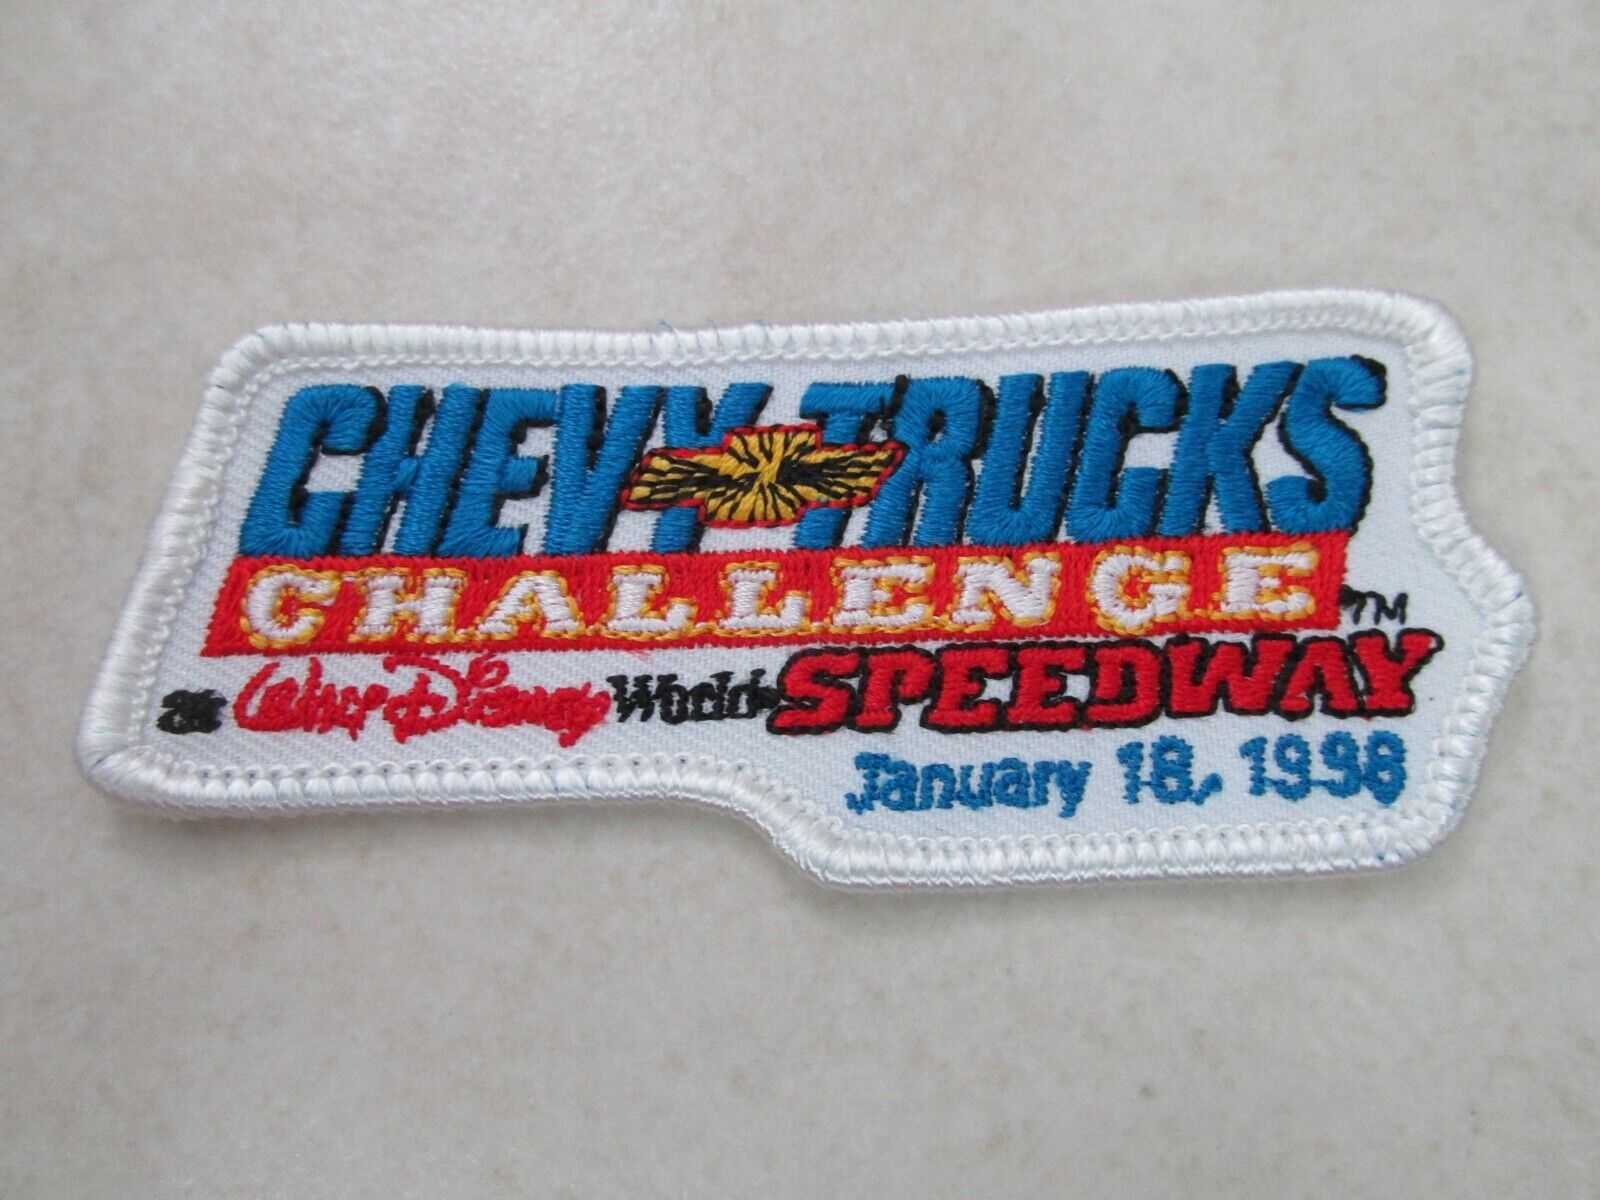 RARE Chevy Trucks Challenge Walt Disney World Speedway 1998 Racing Patch